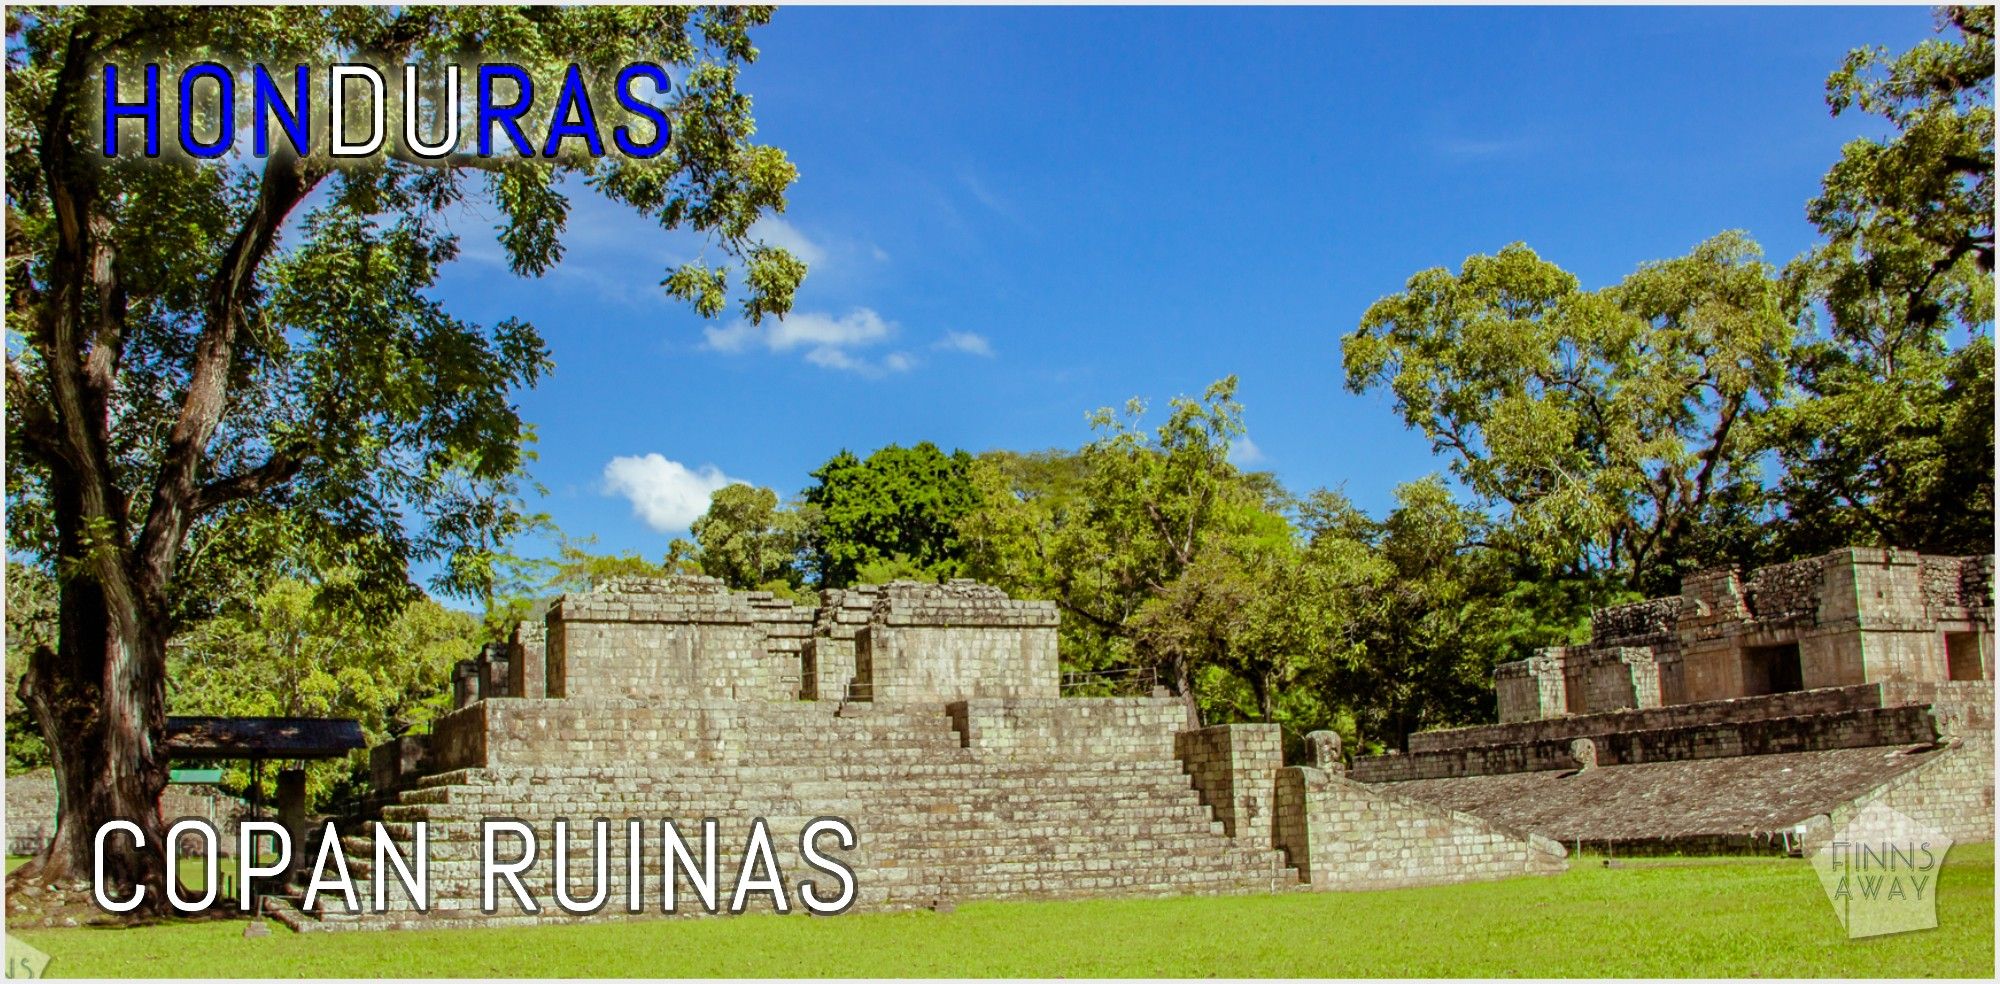 Travel guide to Copan Mayan ruins and the town of Copan Ruinas in Honduras | FinnsAway Travel Blog